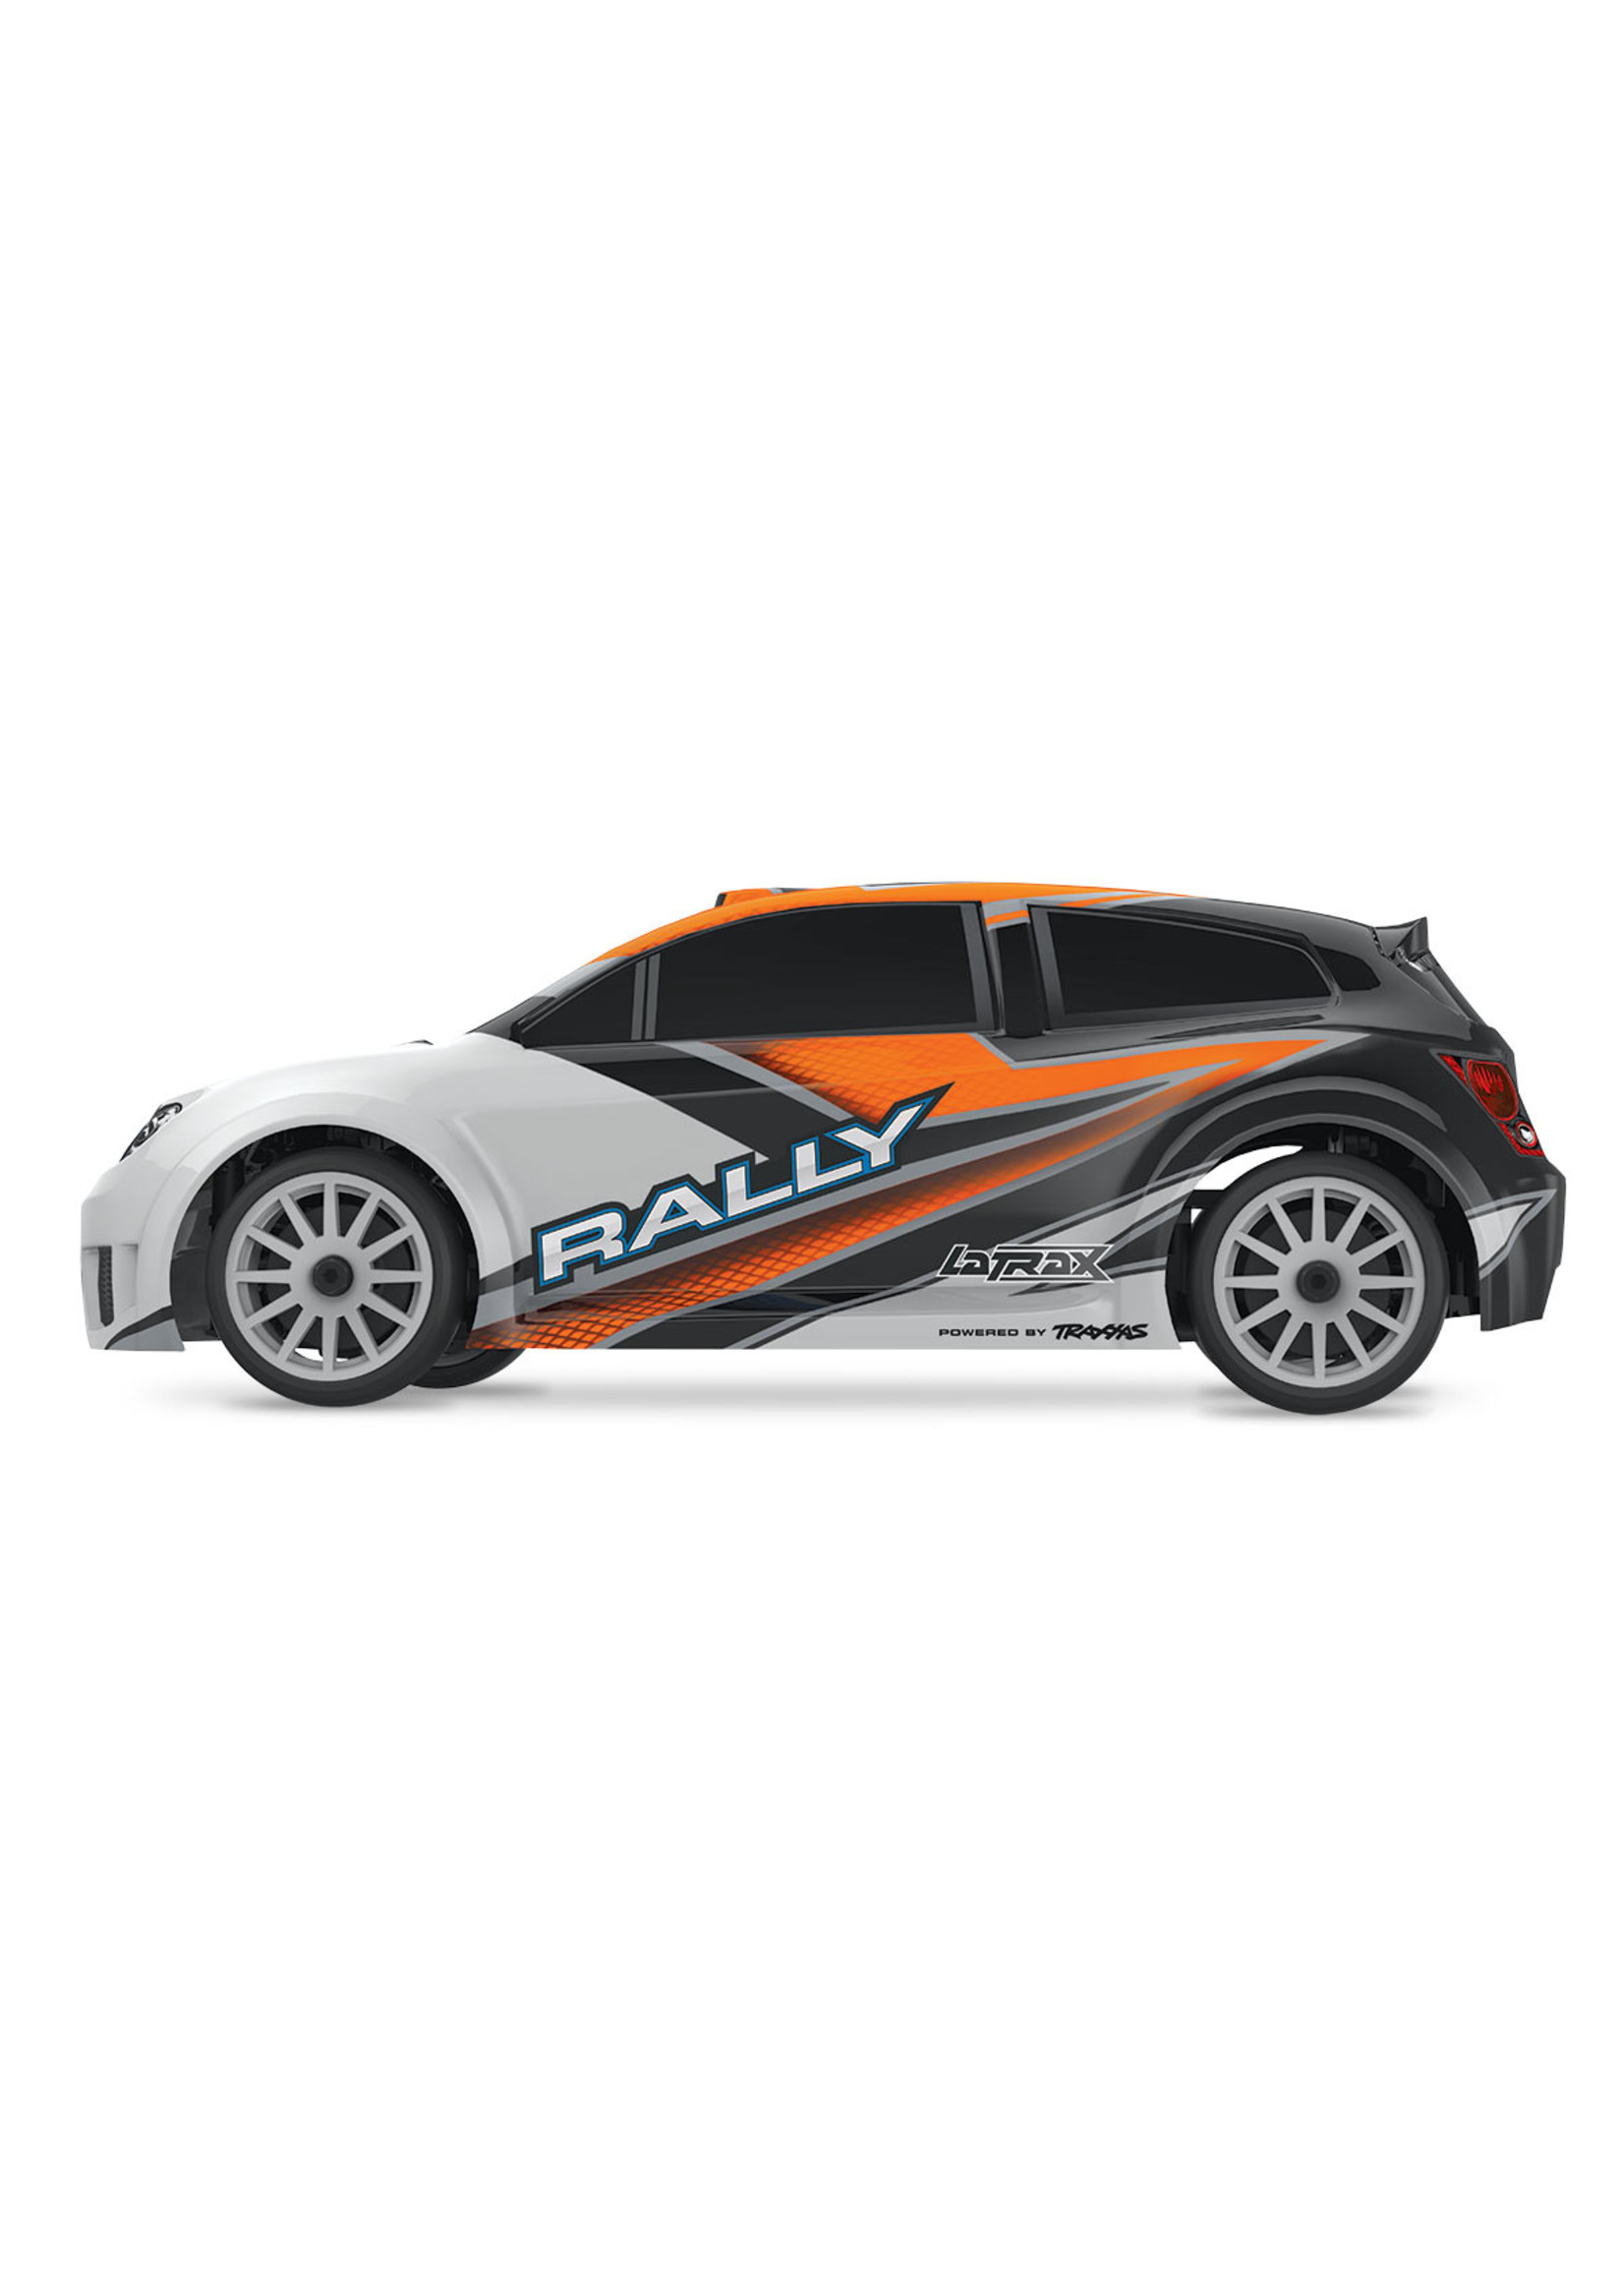 Traxxas 1/18 LaTrax 4WD RTR Rally Car - Orange